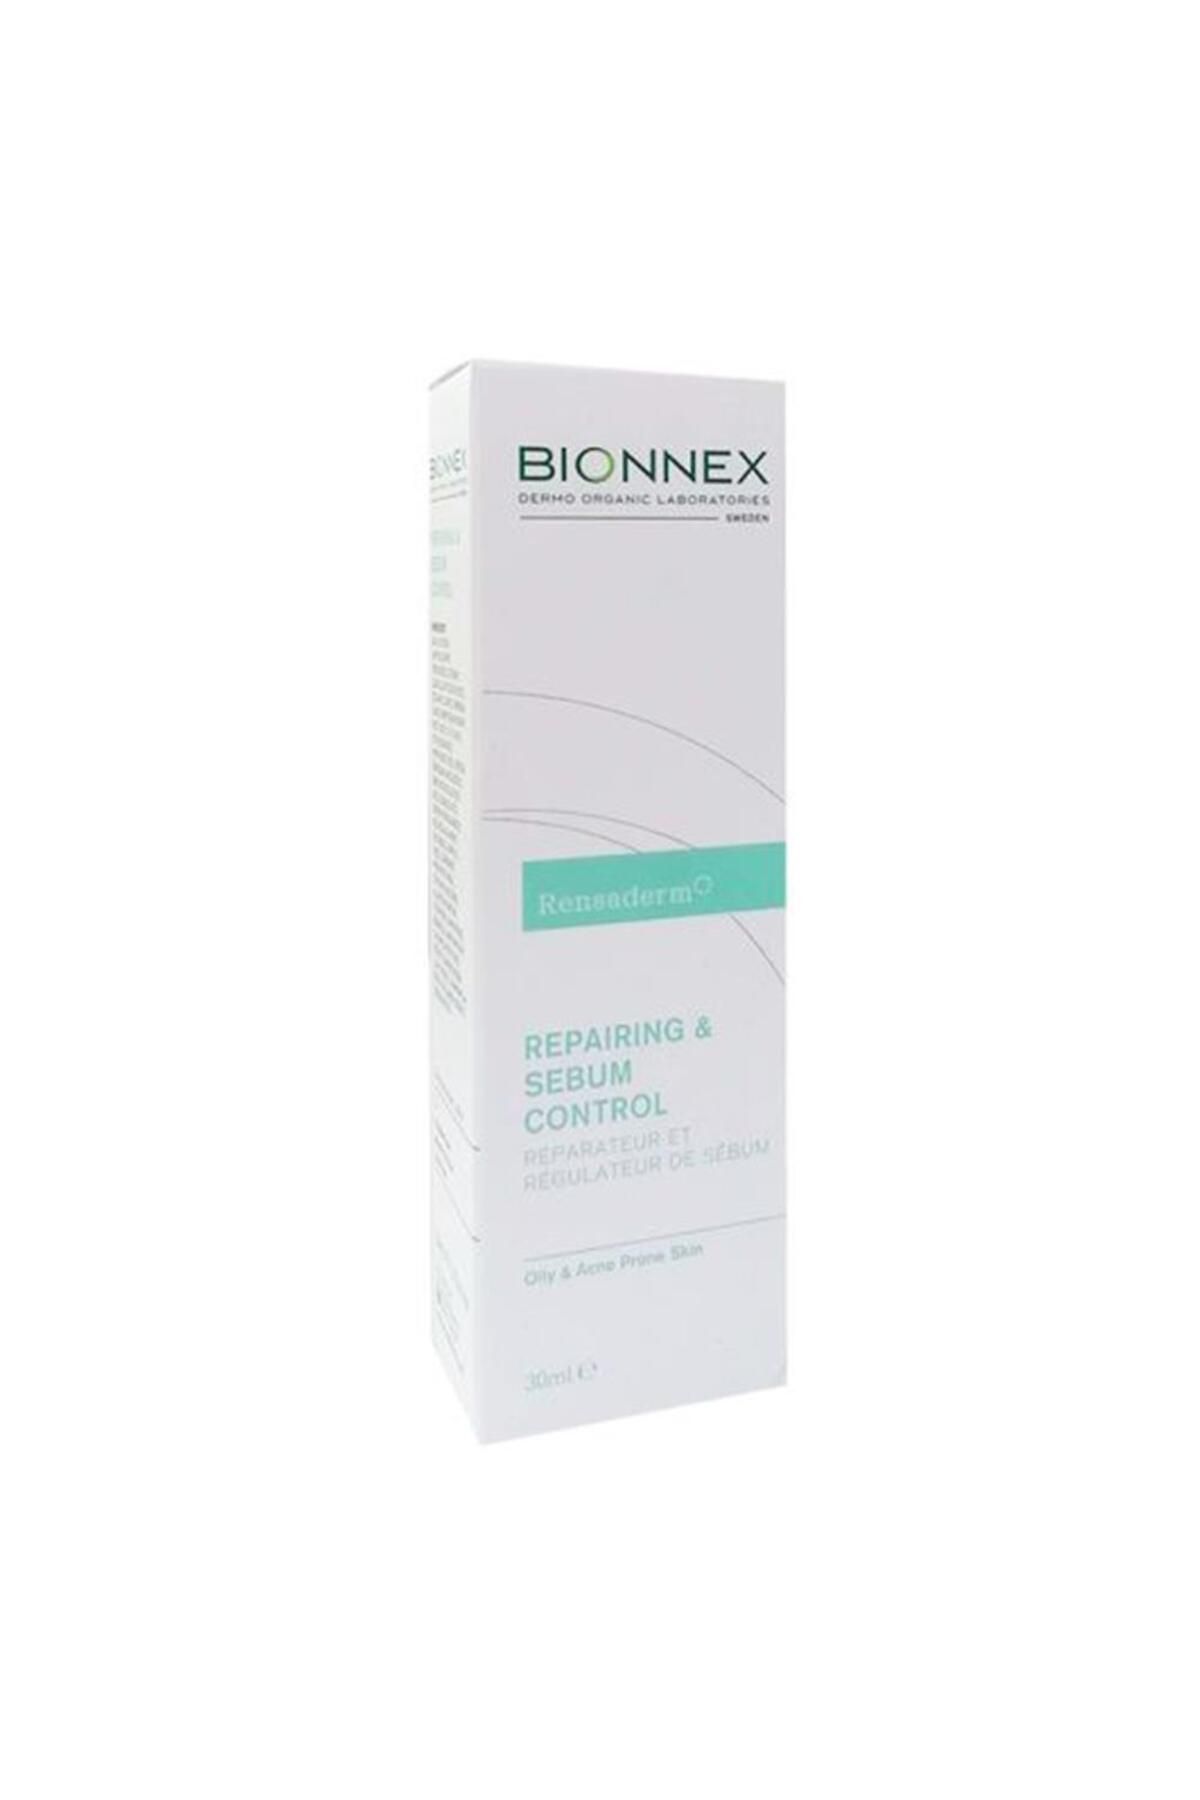 Bionnex Rensaderm Revitalizing & Sebum Control 30